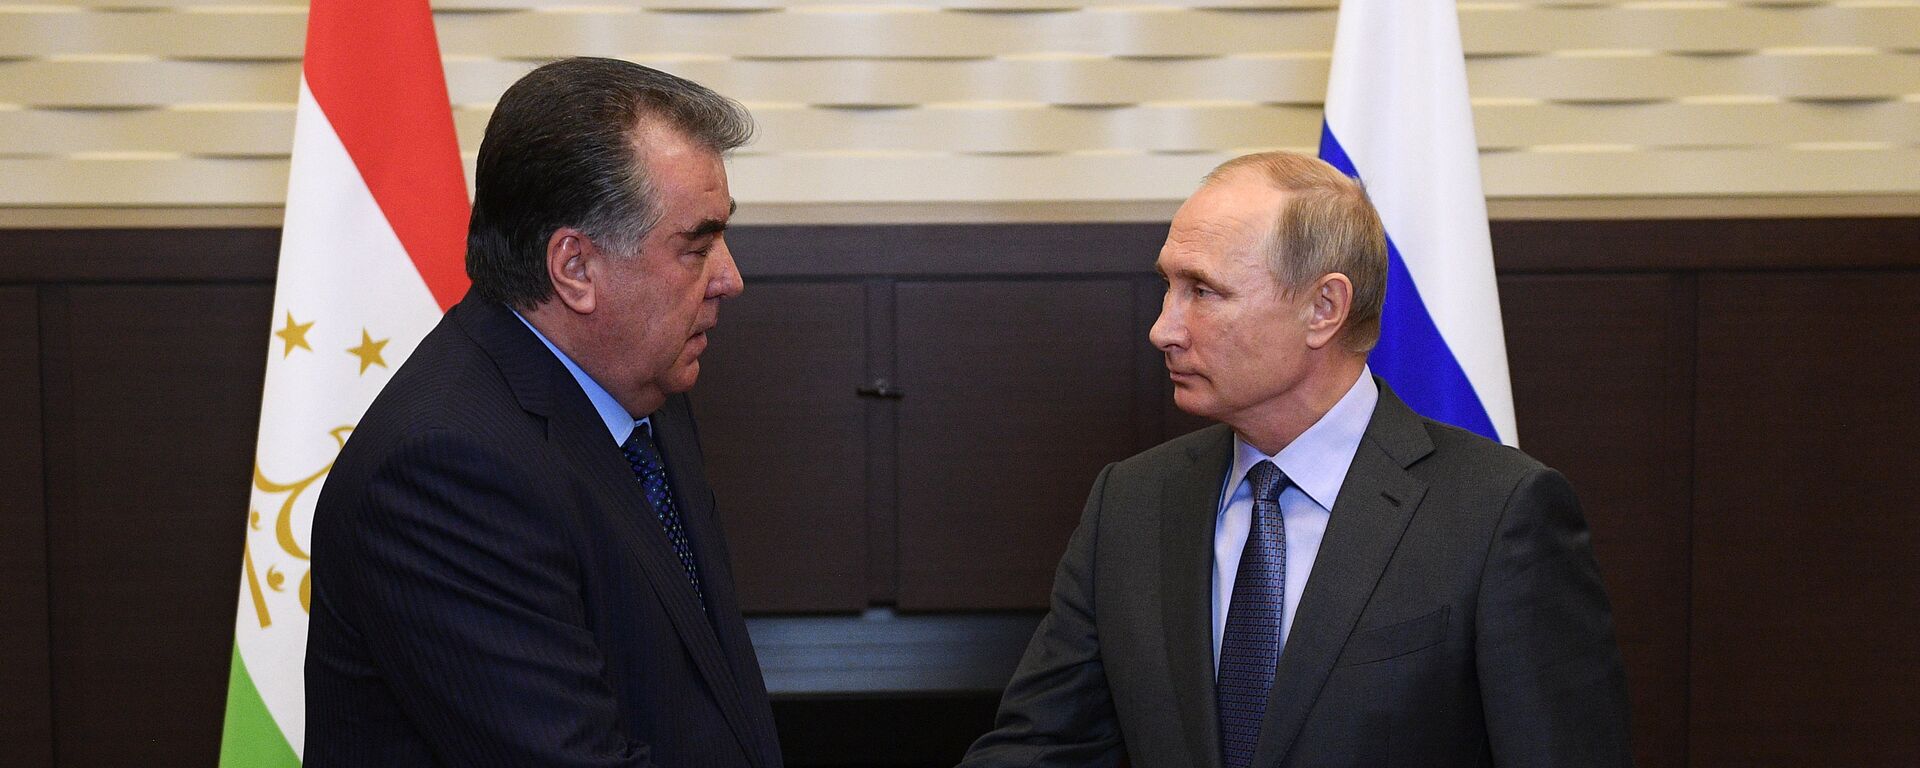 Встреча президента РФ В. Путина с президентом Таджикистана Э. Рахмоном - Sputnik Таджикистан, 1920, 26.11.2021